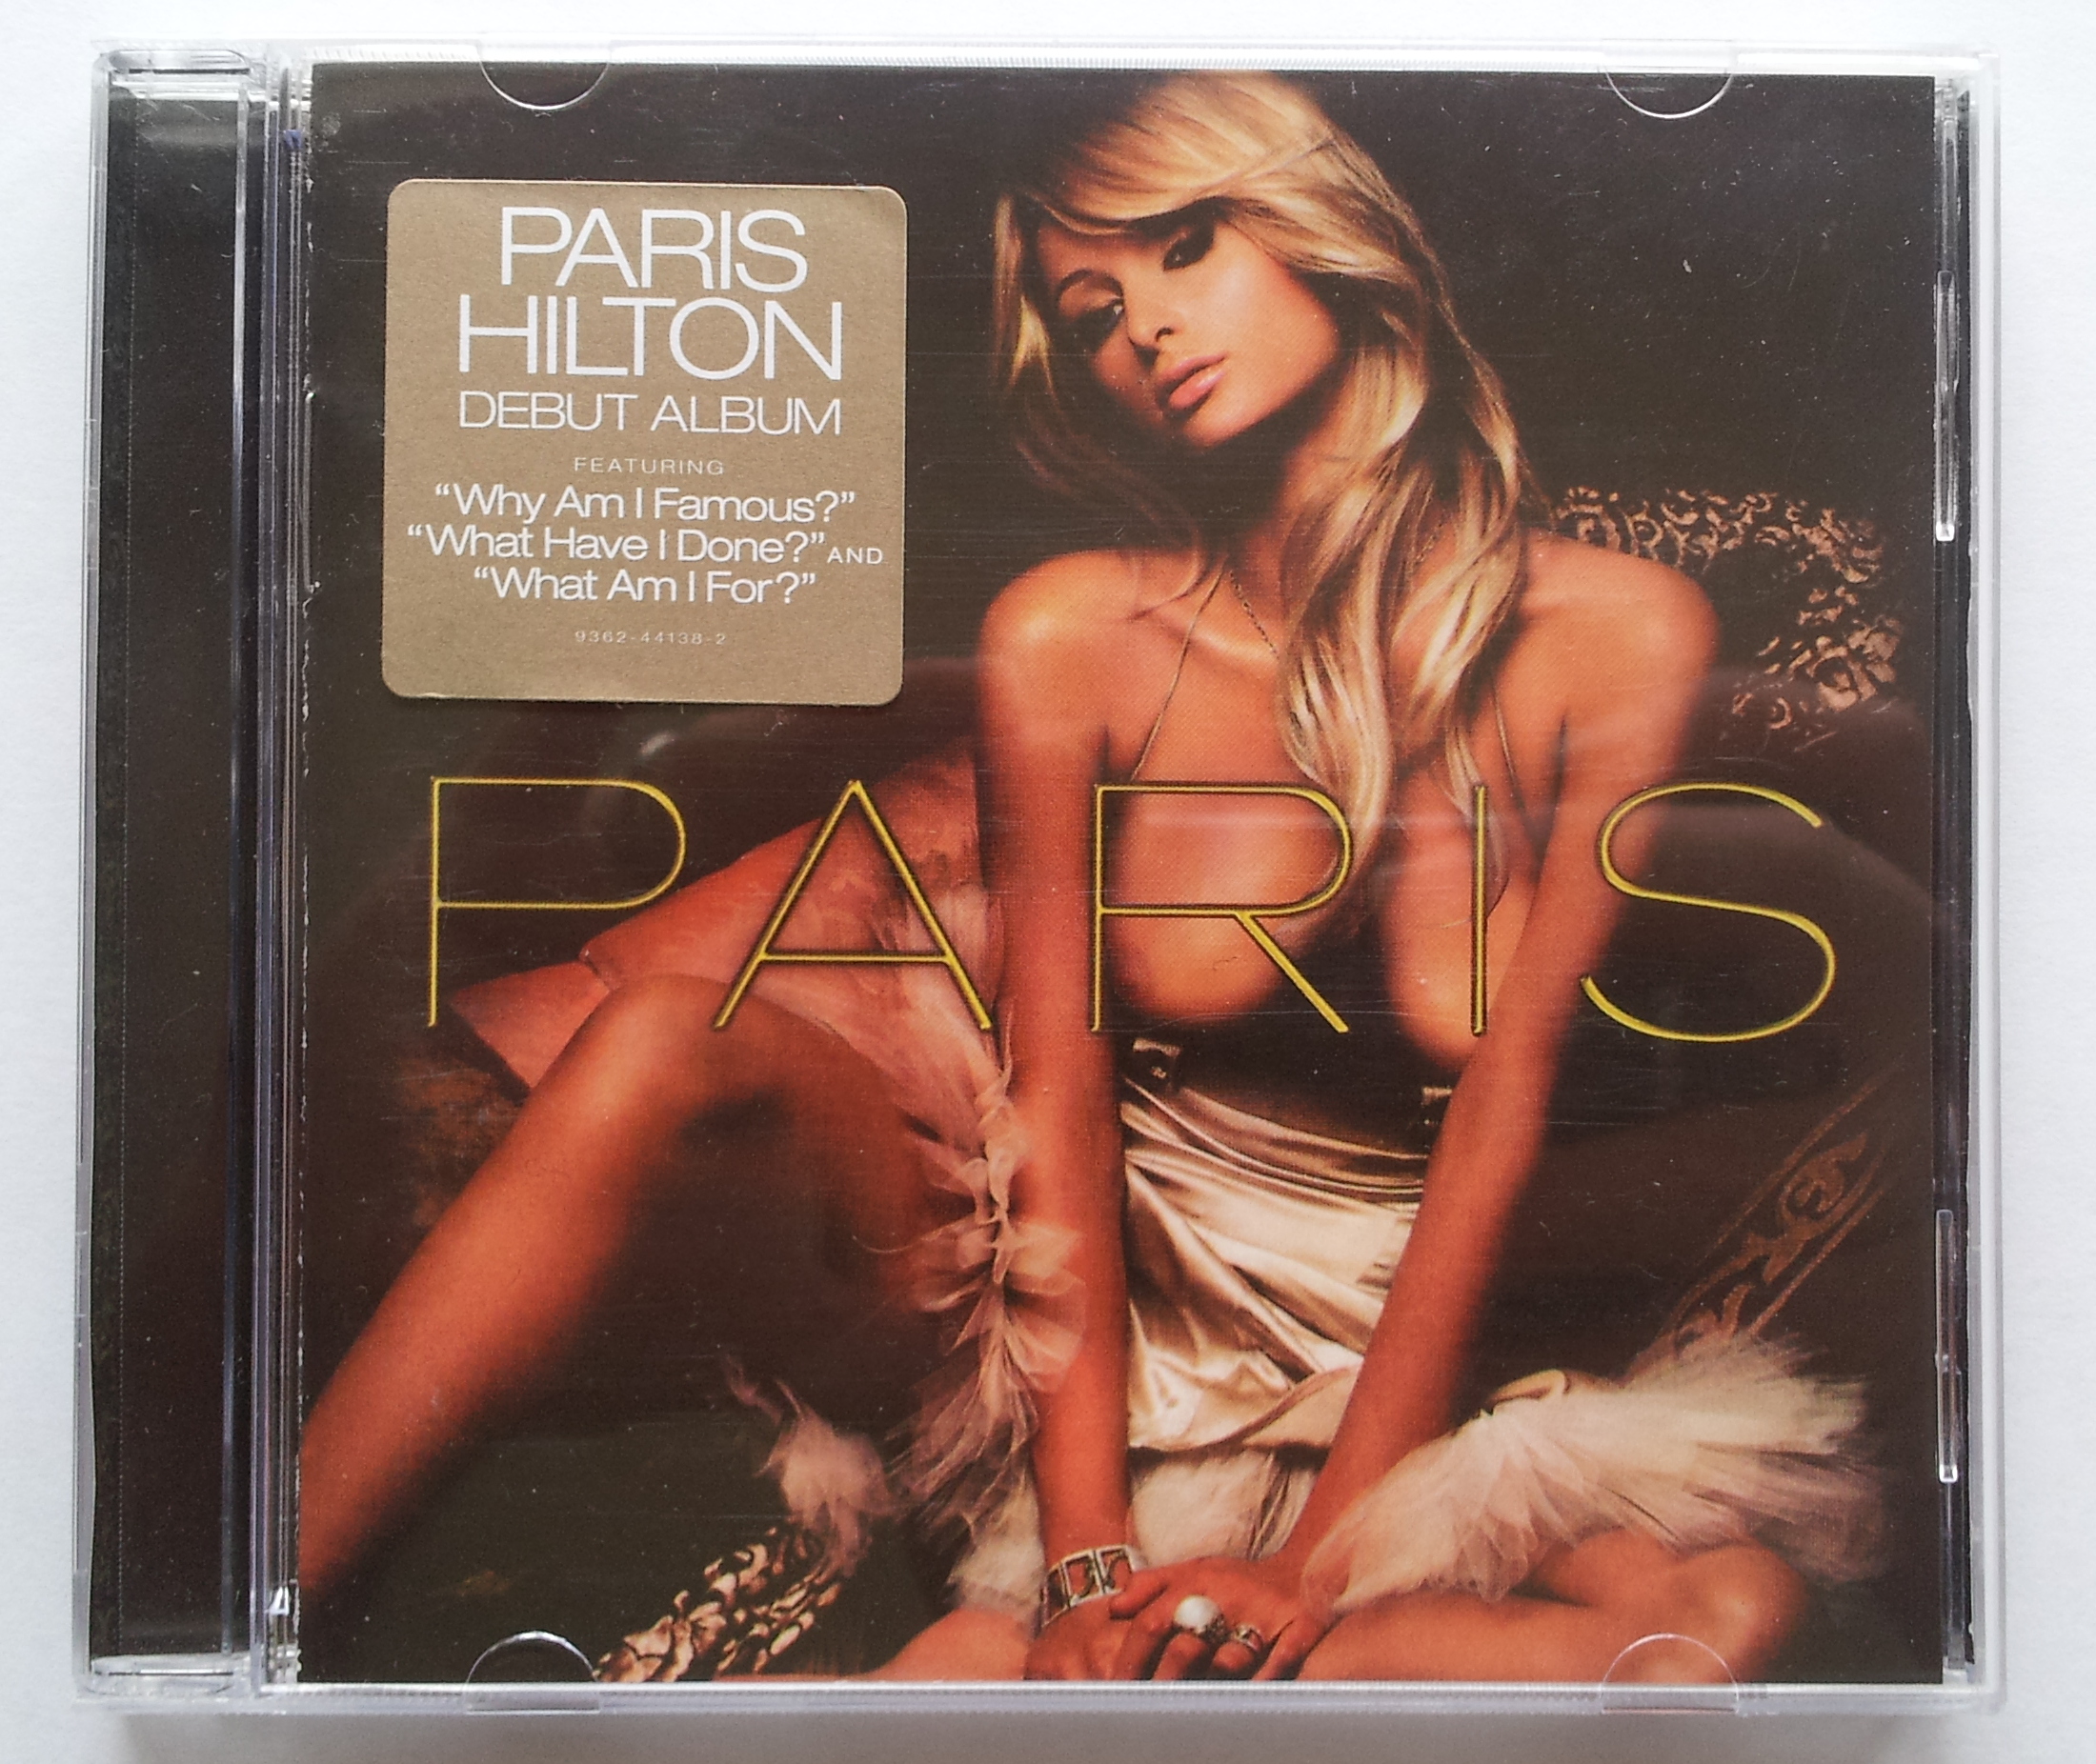 Genuine 1st Pressing Banksy Paris Hilton CD For Sale Sold